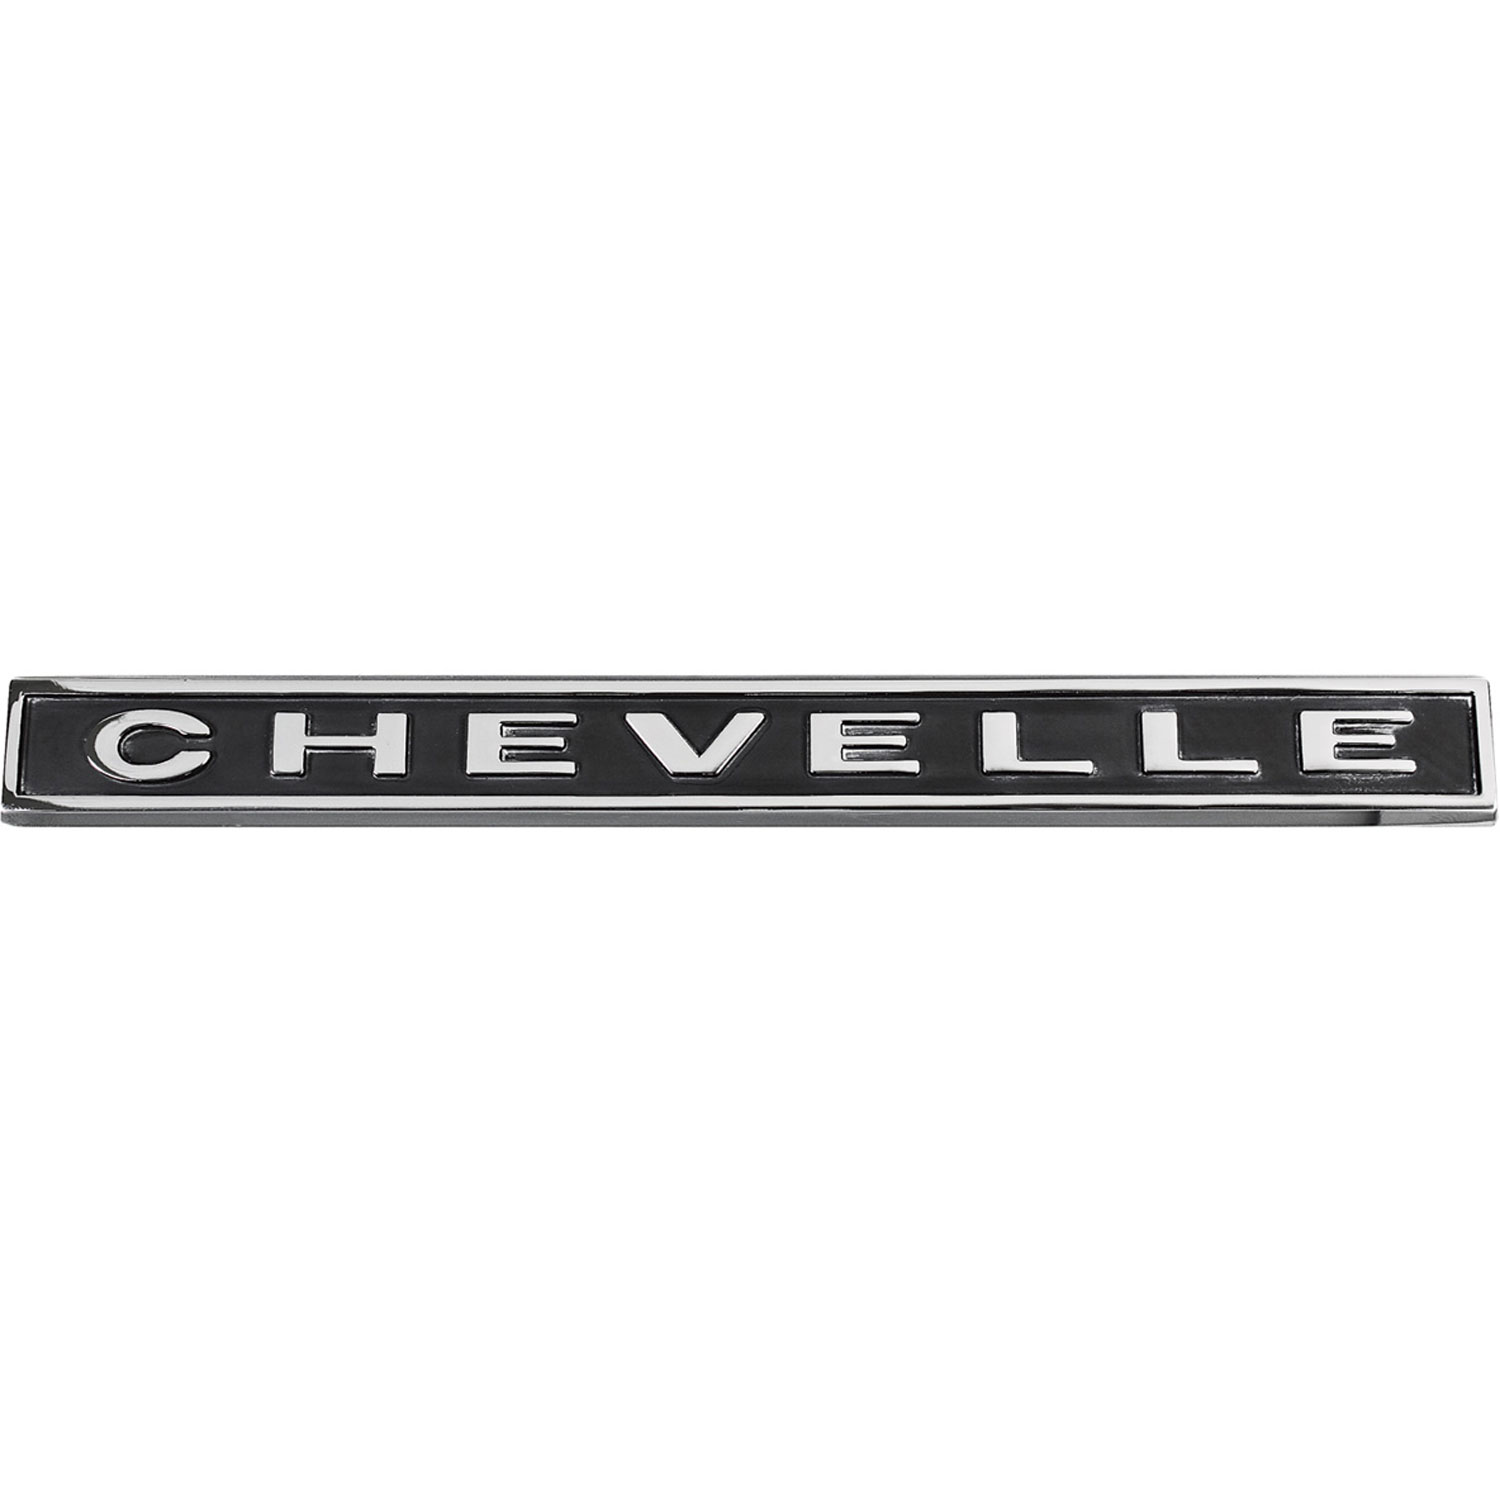 Emblem Rear Panel 1967 Chevelle